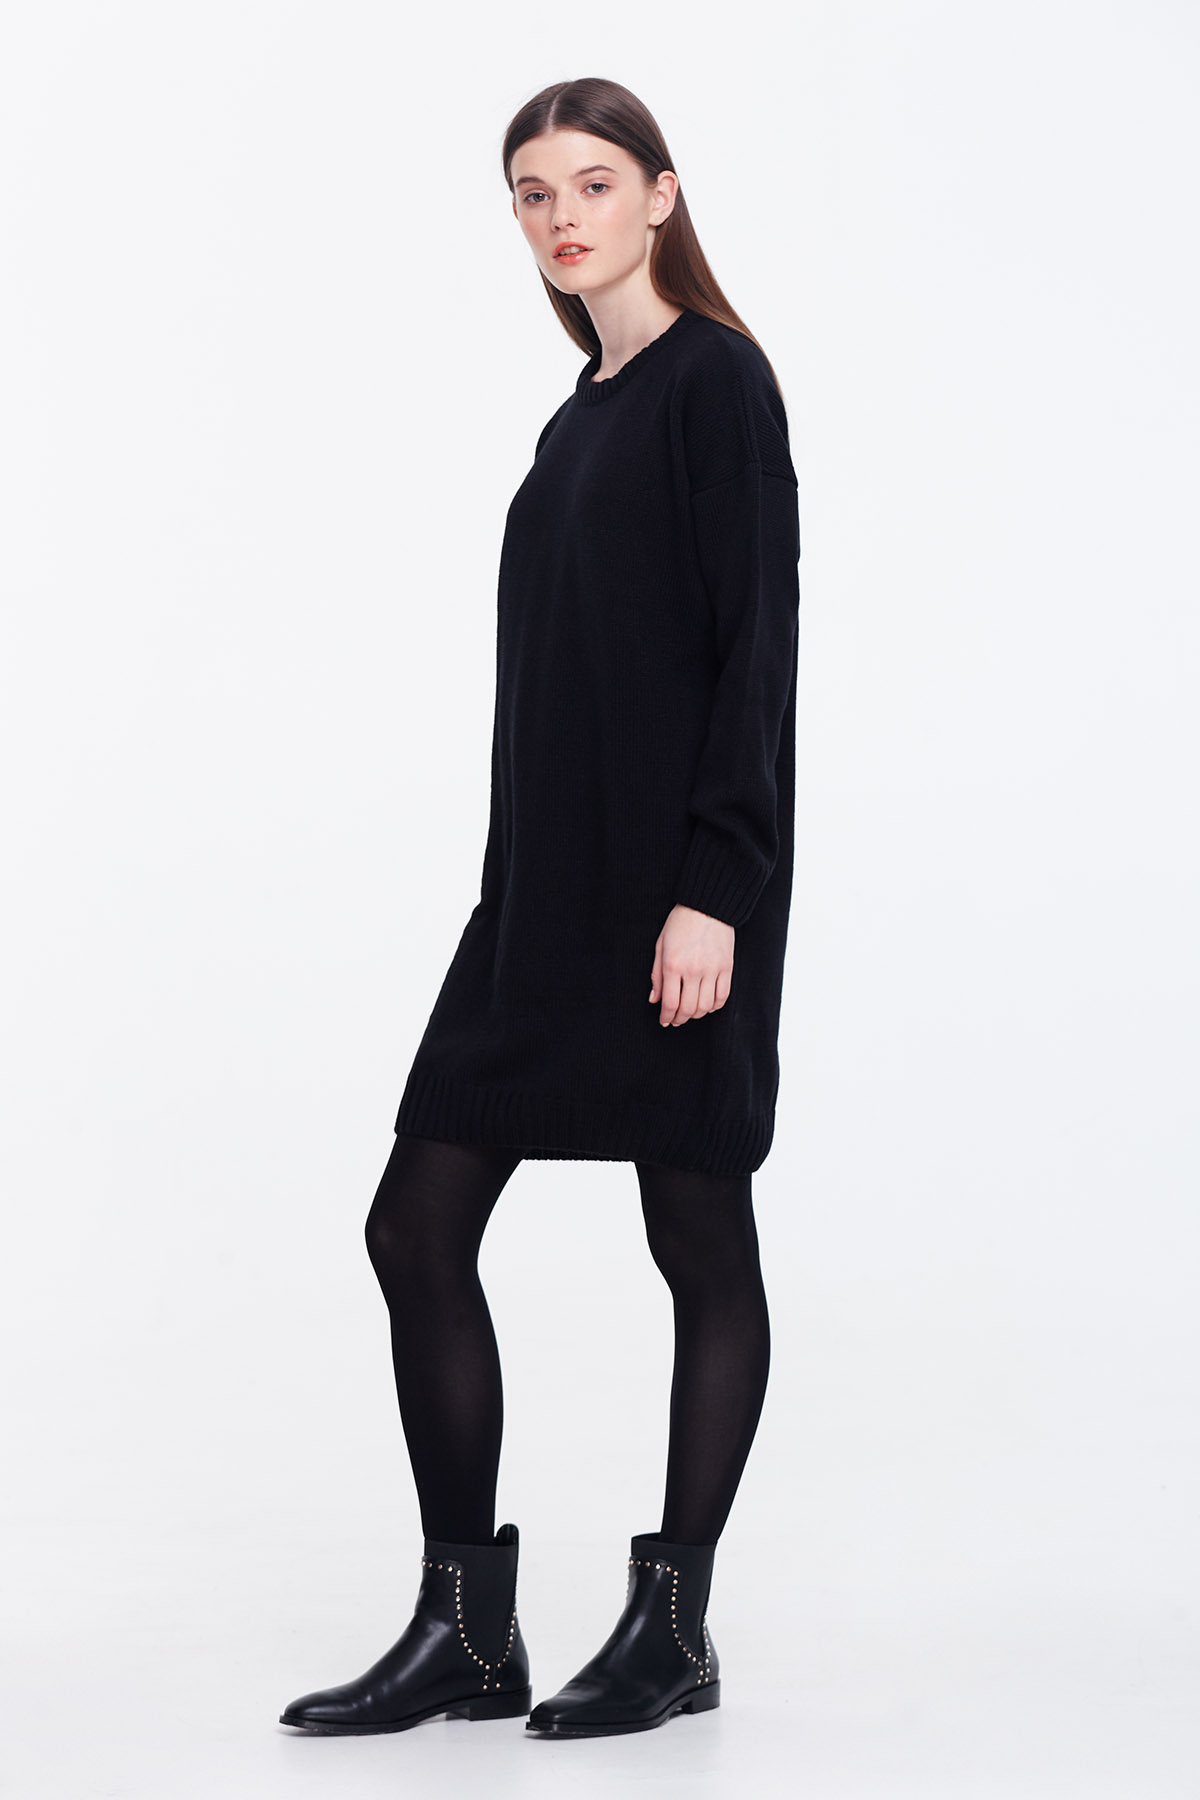 Loose-fitting black knit dress , photo 1